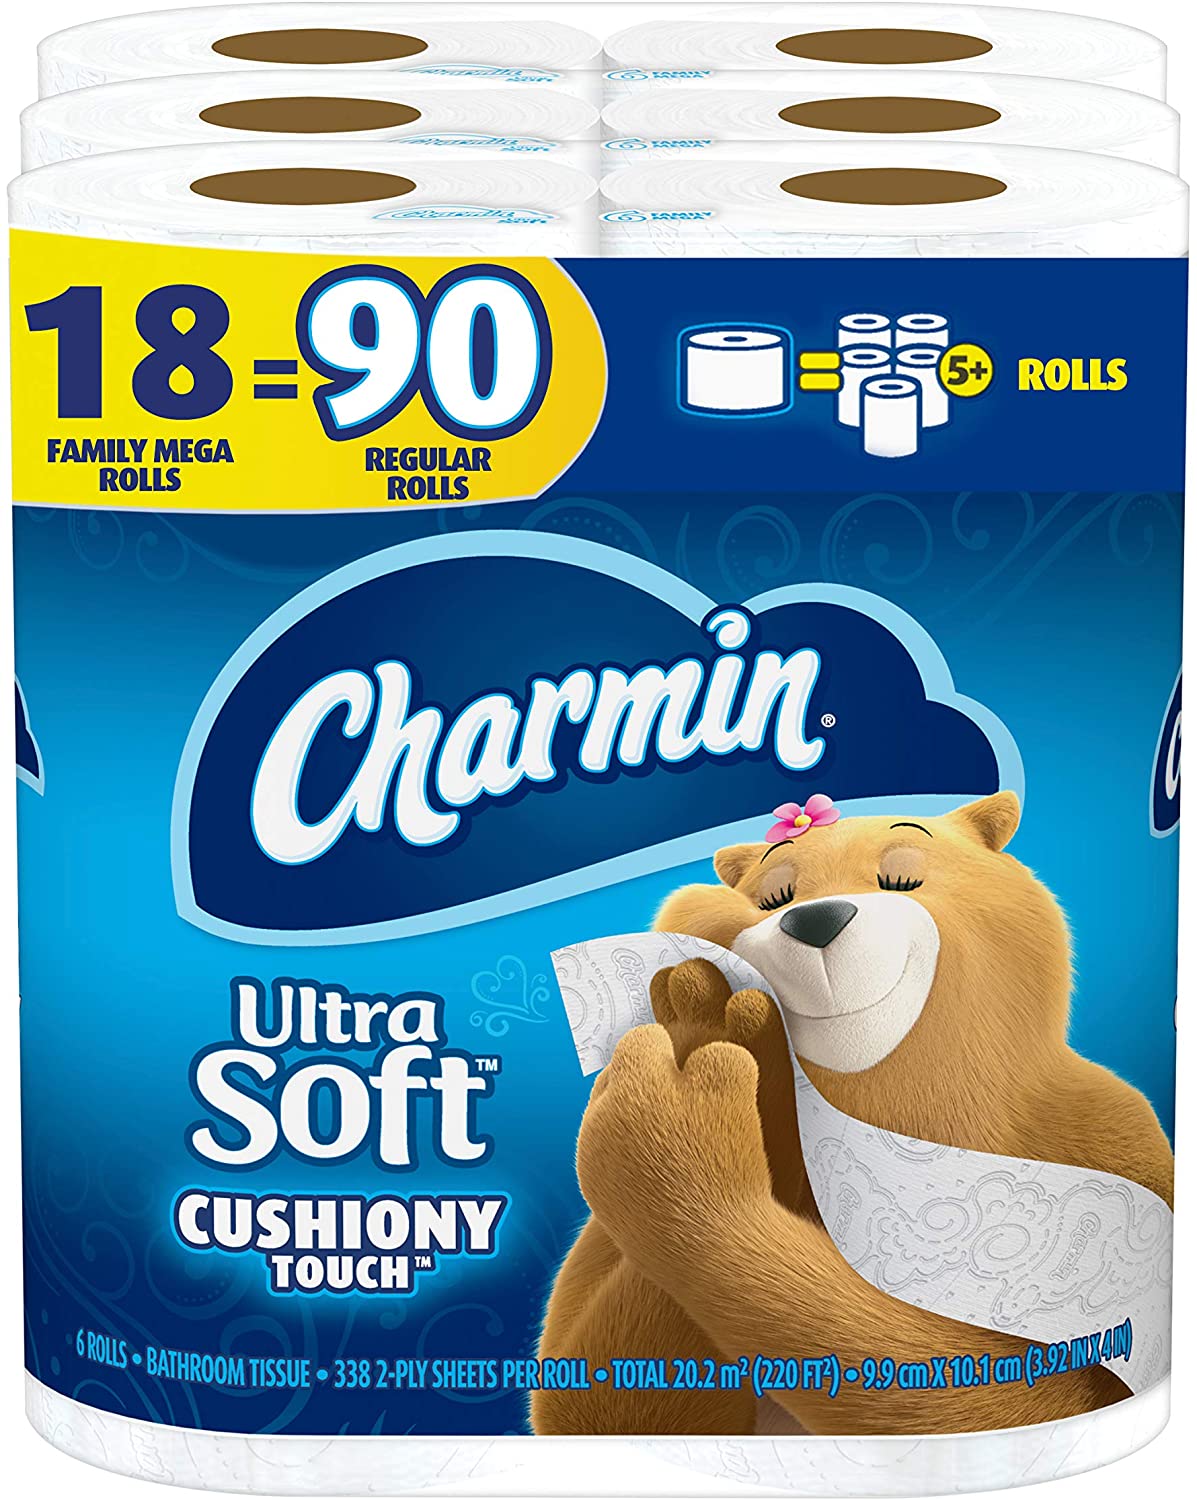 Charmin Ultra Soft Cushiony Touch Toilet Paper, 24 Family Mega Rolls = 123 Regular Rolls @ $43.44!